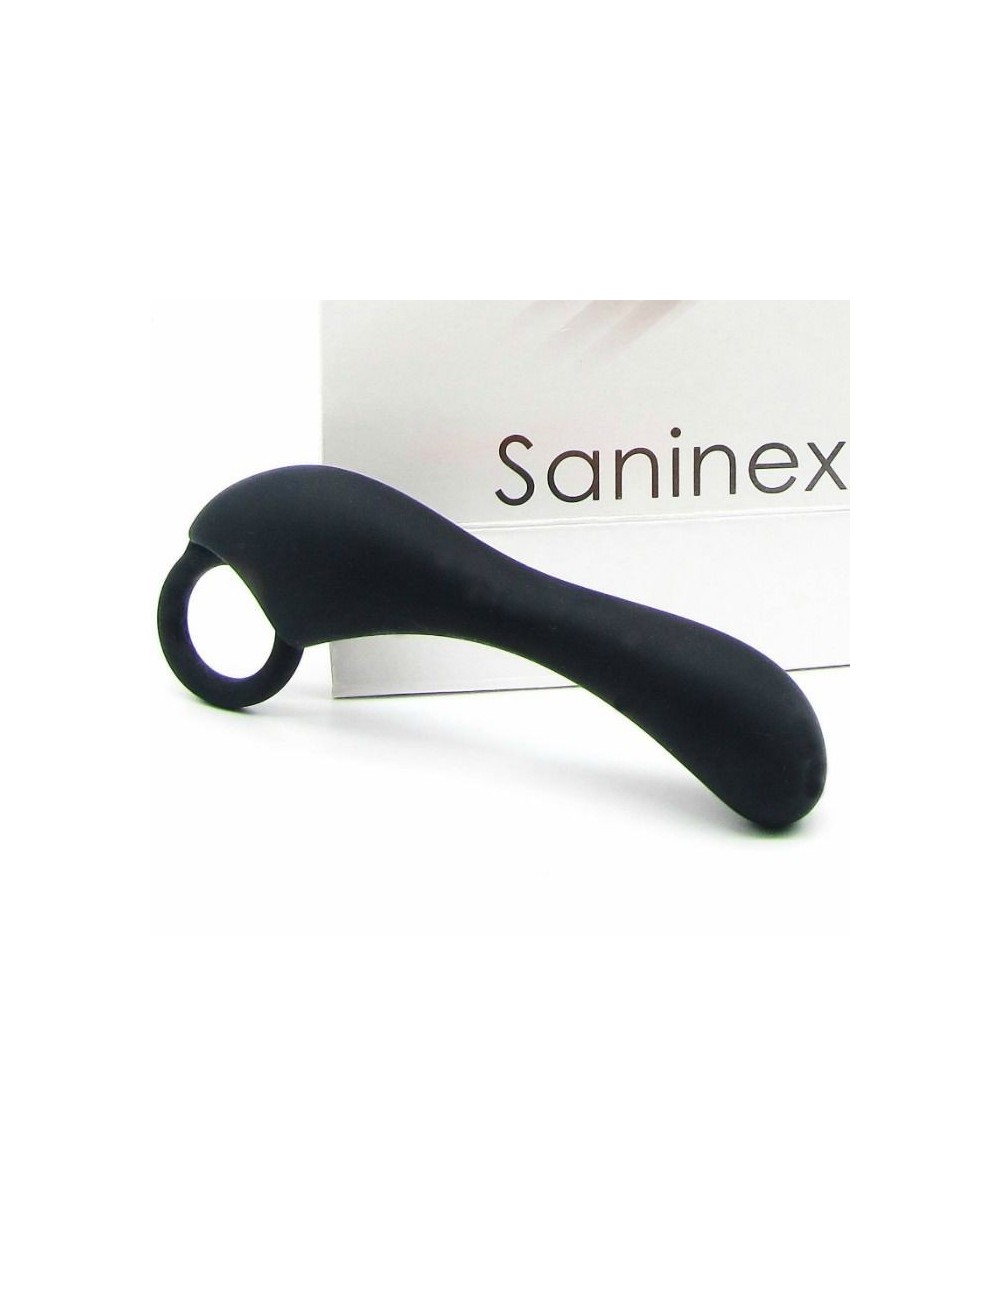 Sextoys - Godes & Plugs - STIMULATEUR SANINEX DUPLEX SEXE ANAL ORGASMIQUE UNISEXE NOIR - SANINEX SEXTOYS